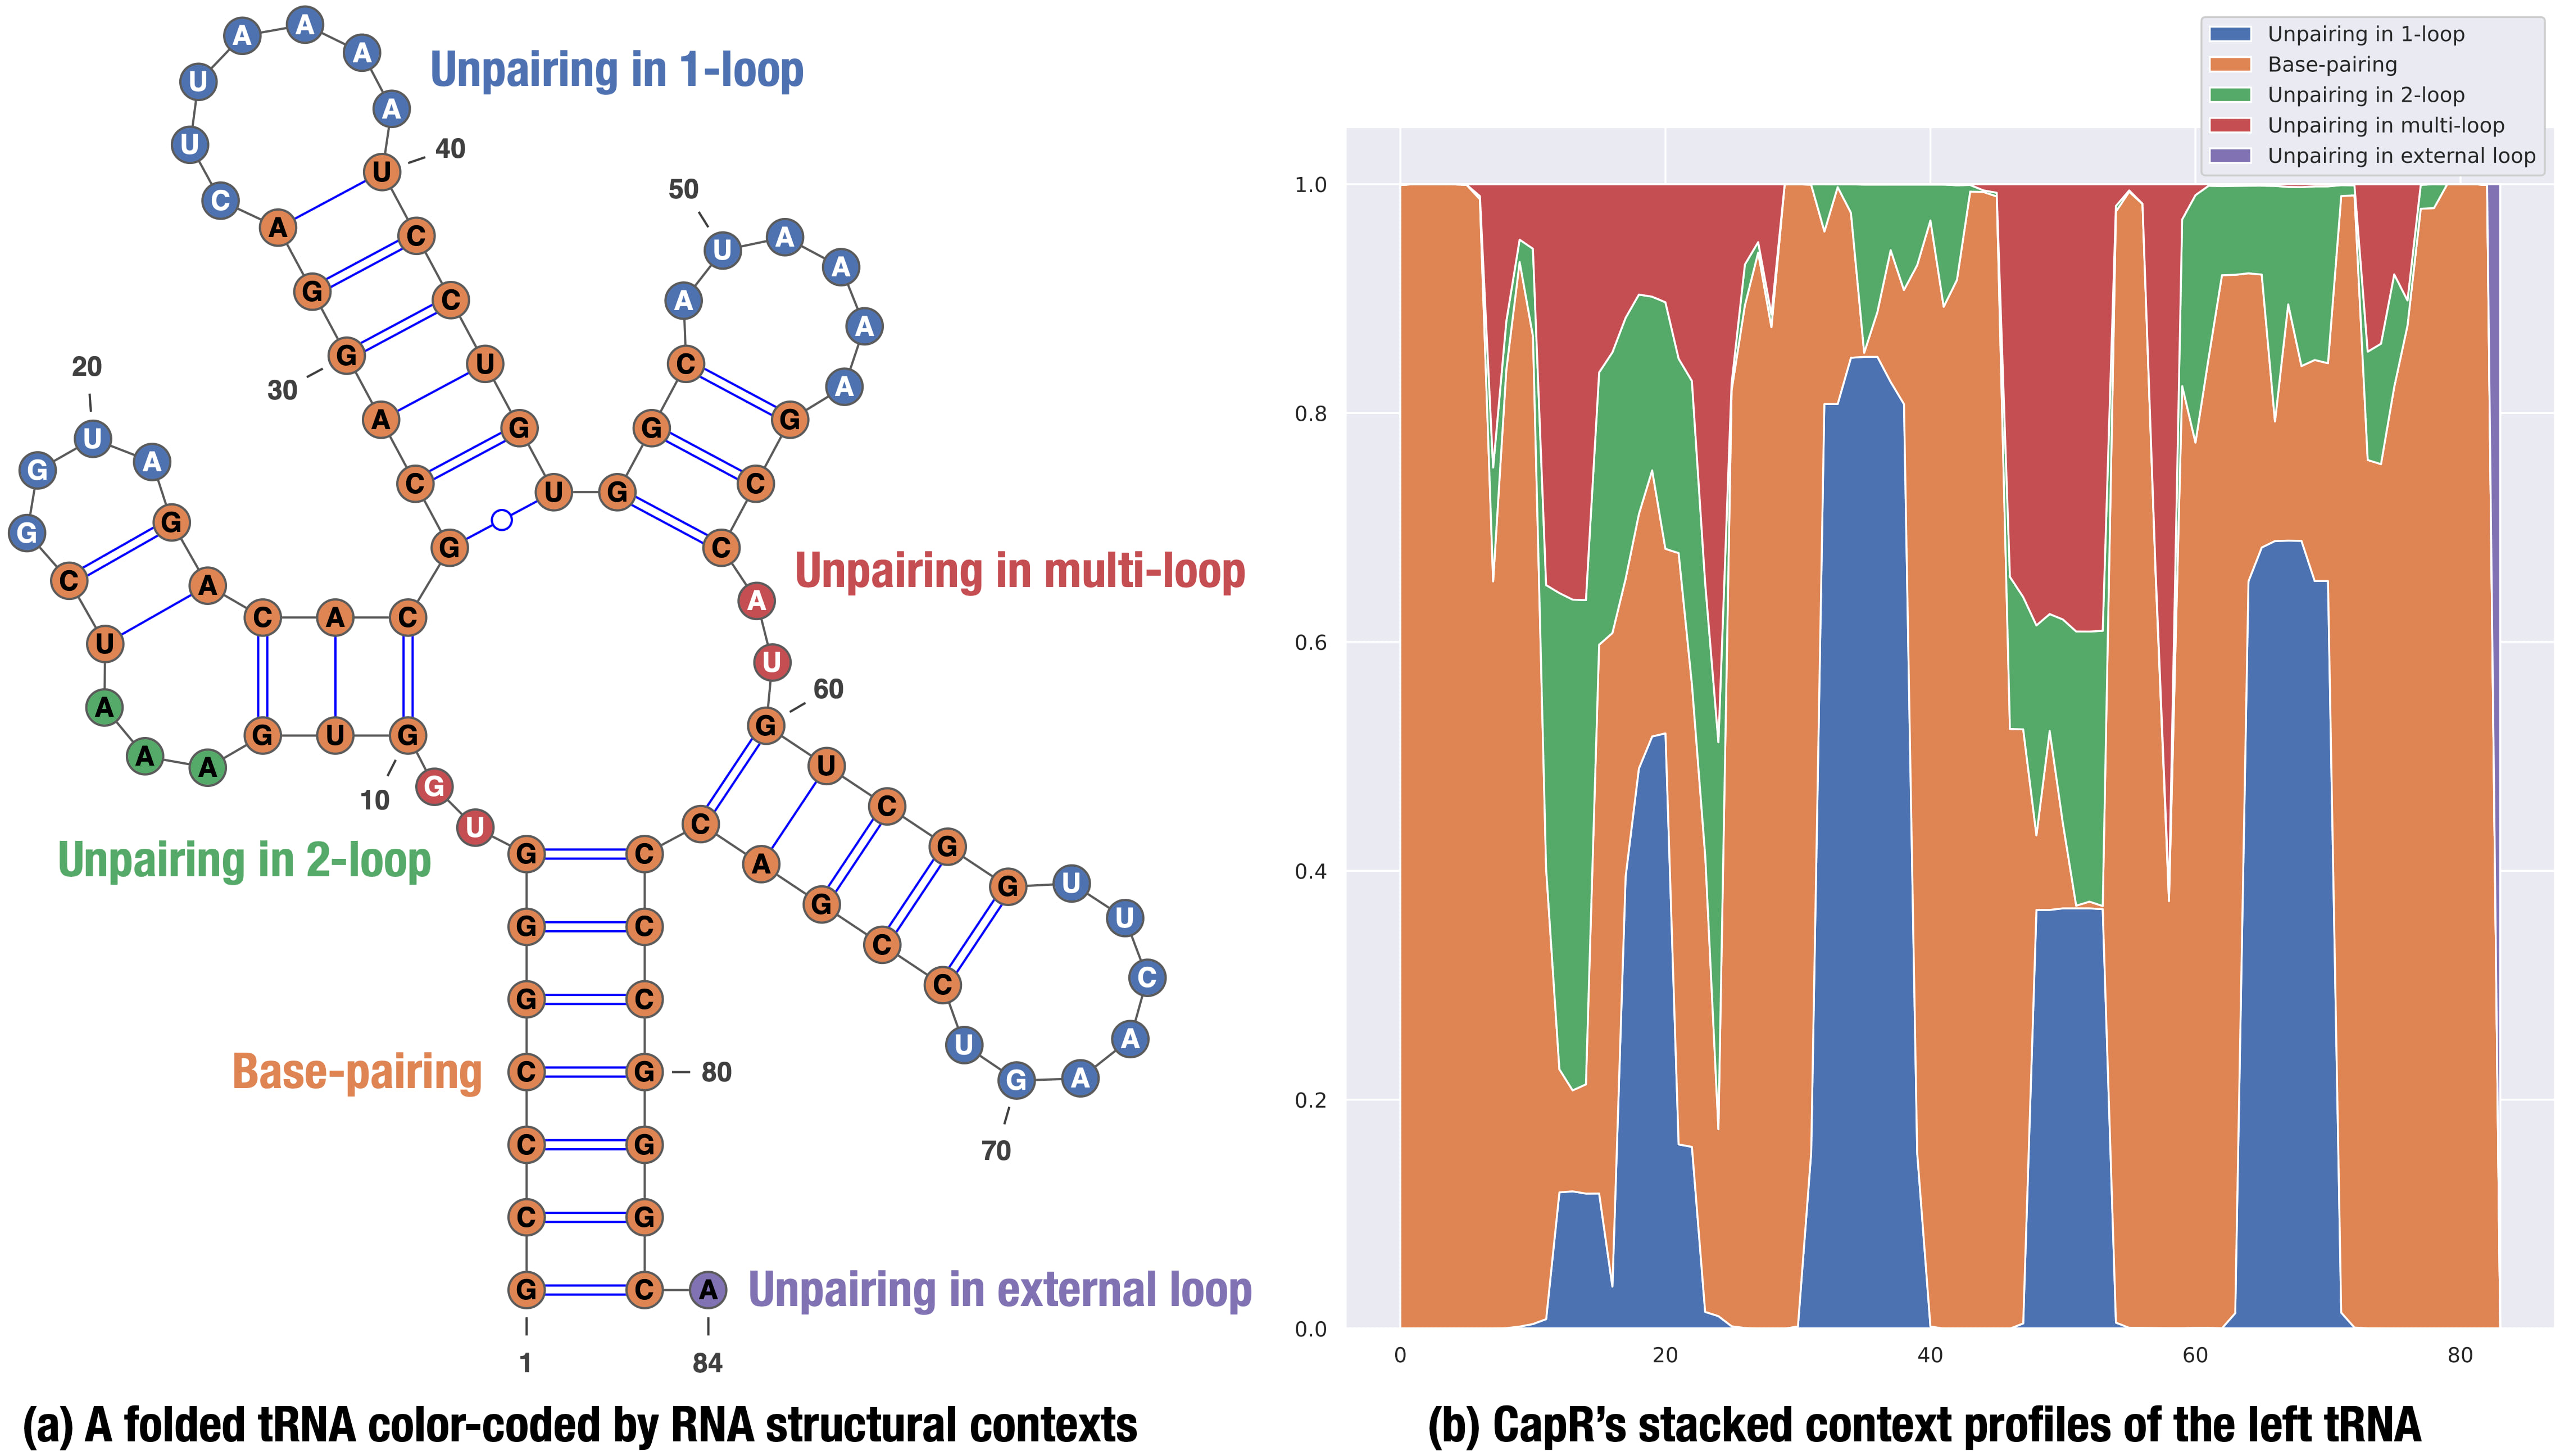 CapR's structural context profiles